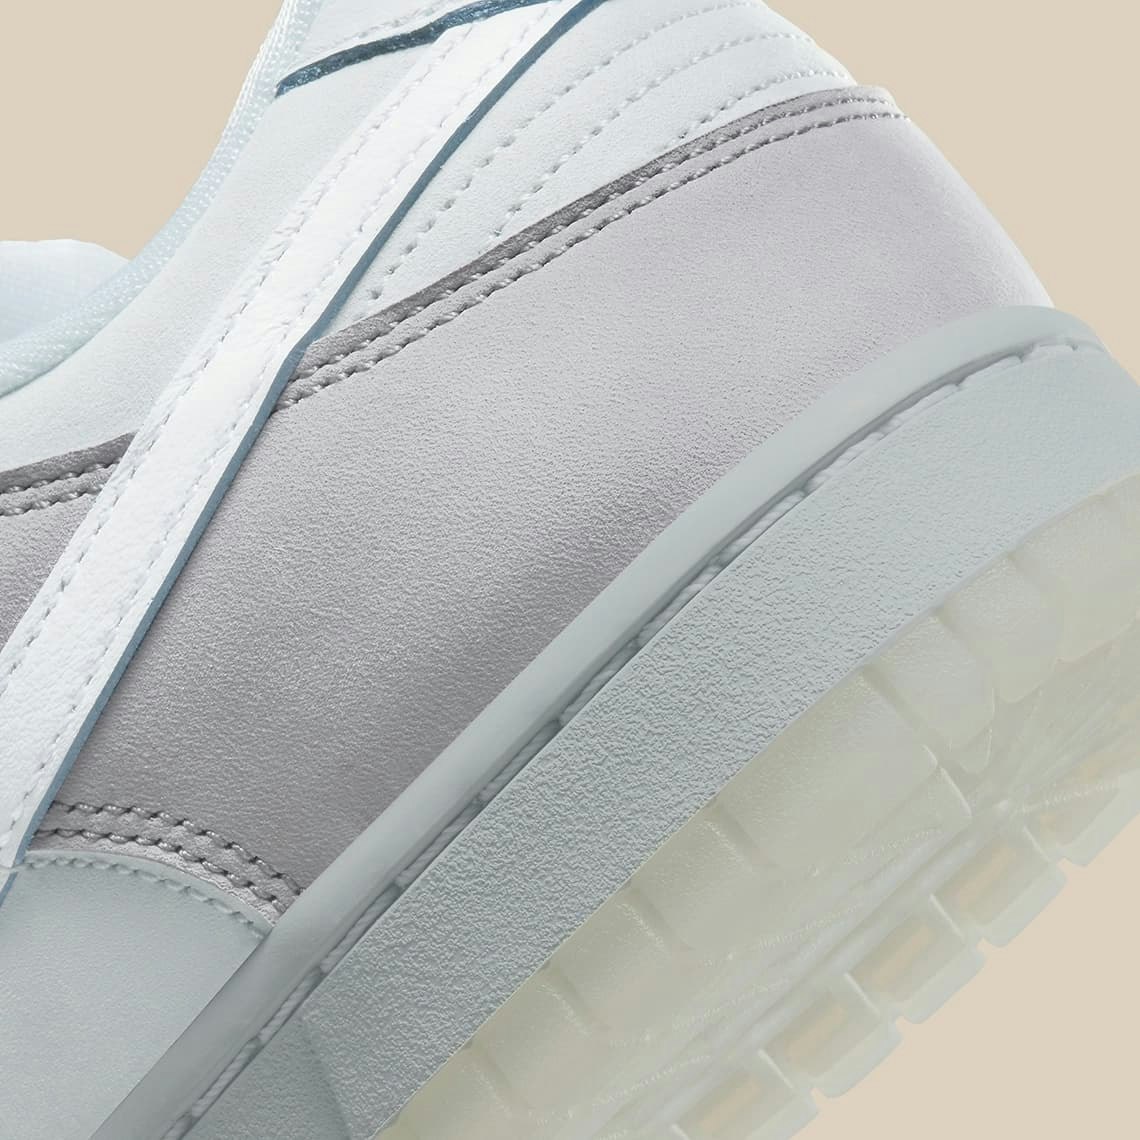 Nike Dunk Low Premium “Grey Leather”